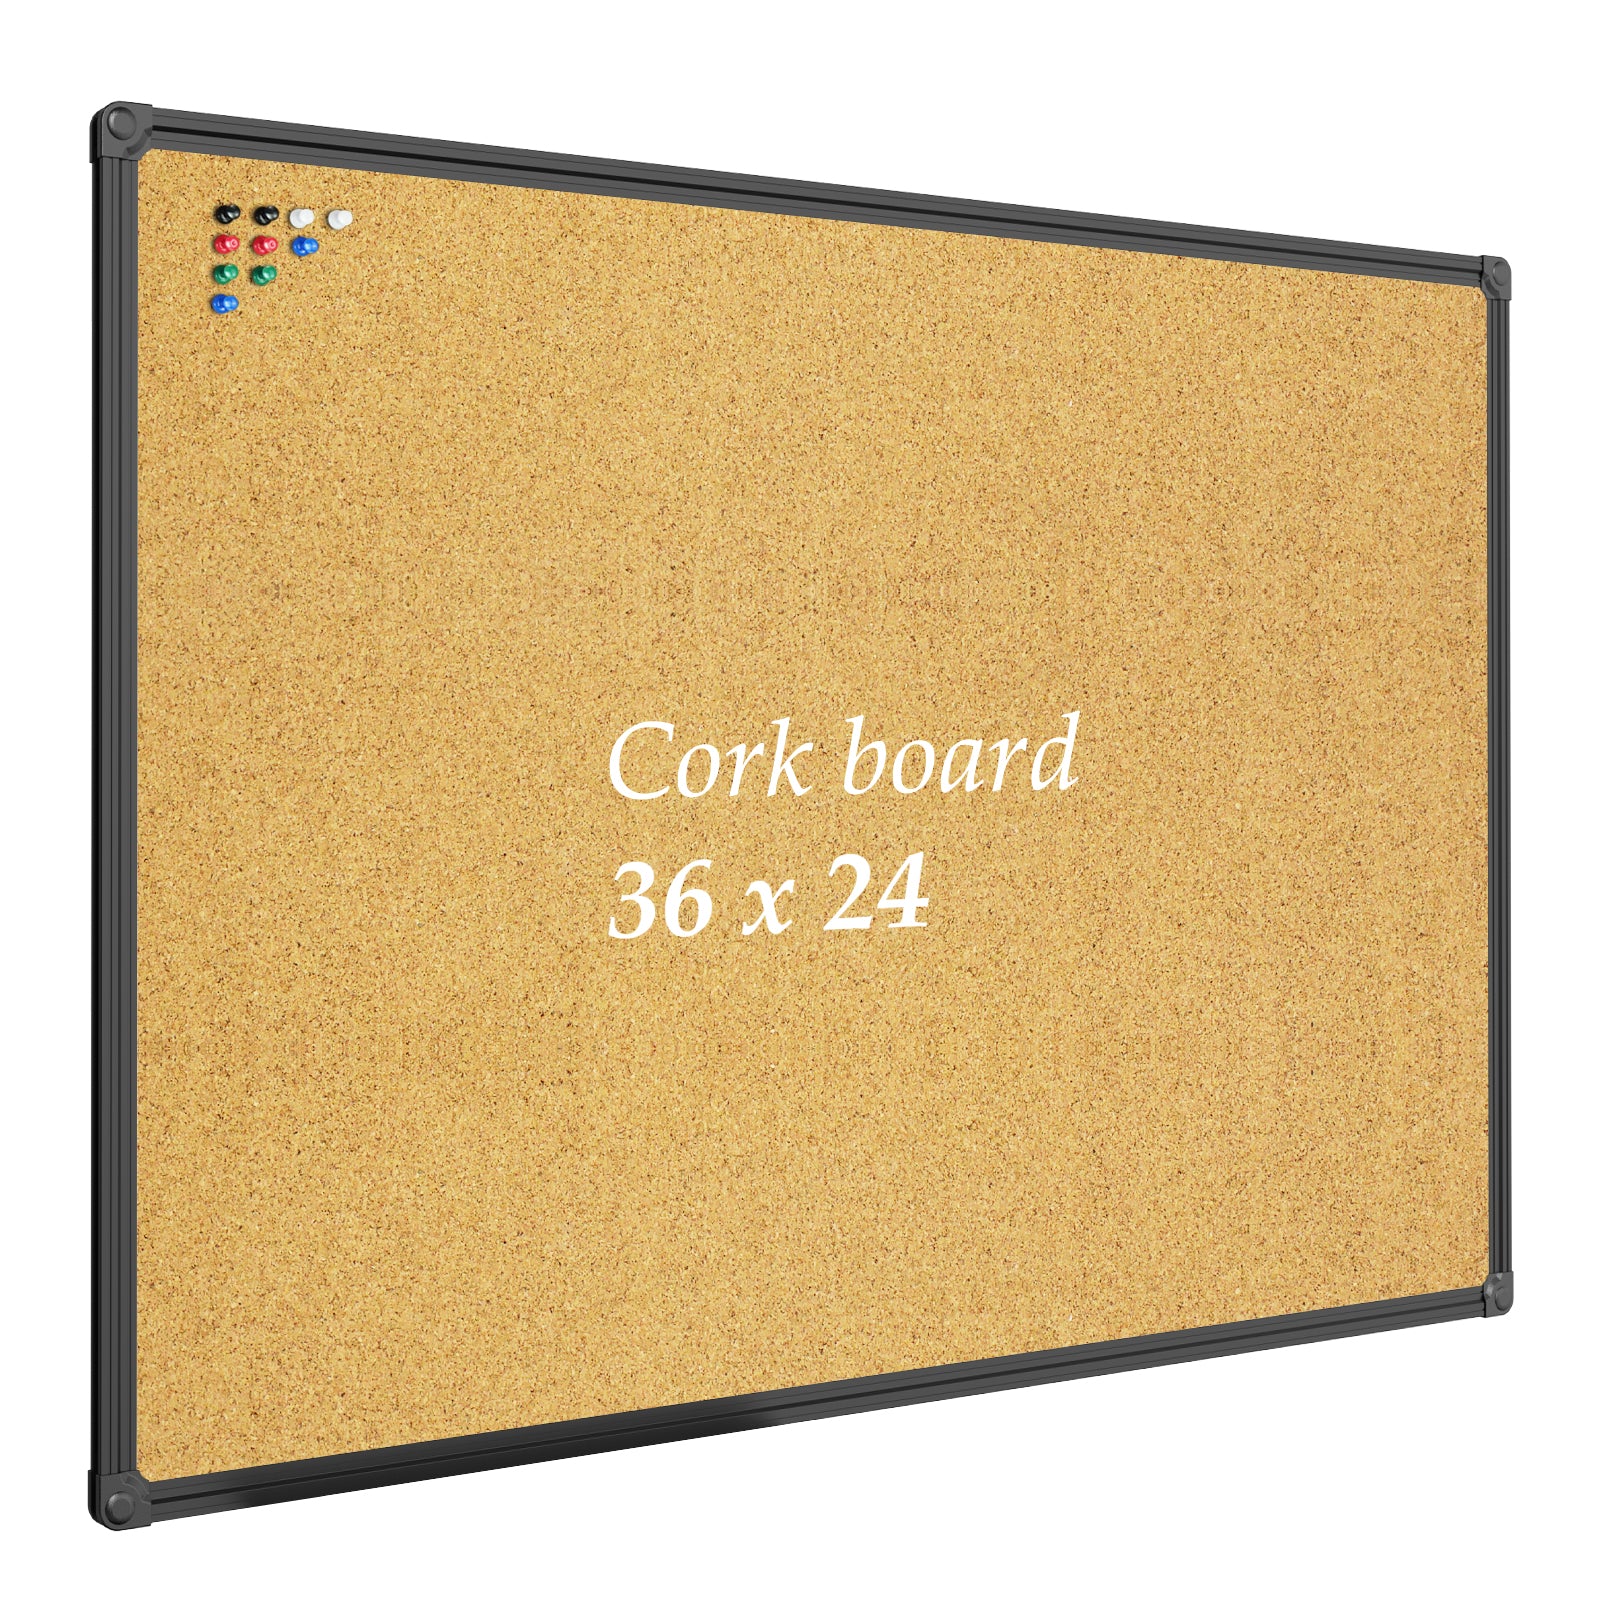 The Ultimate Guide to Cork Board Bulletin Boards